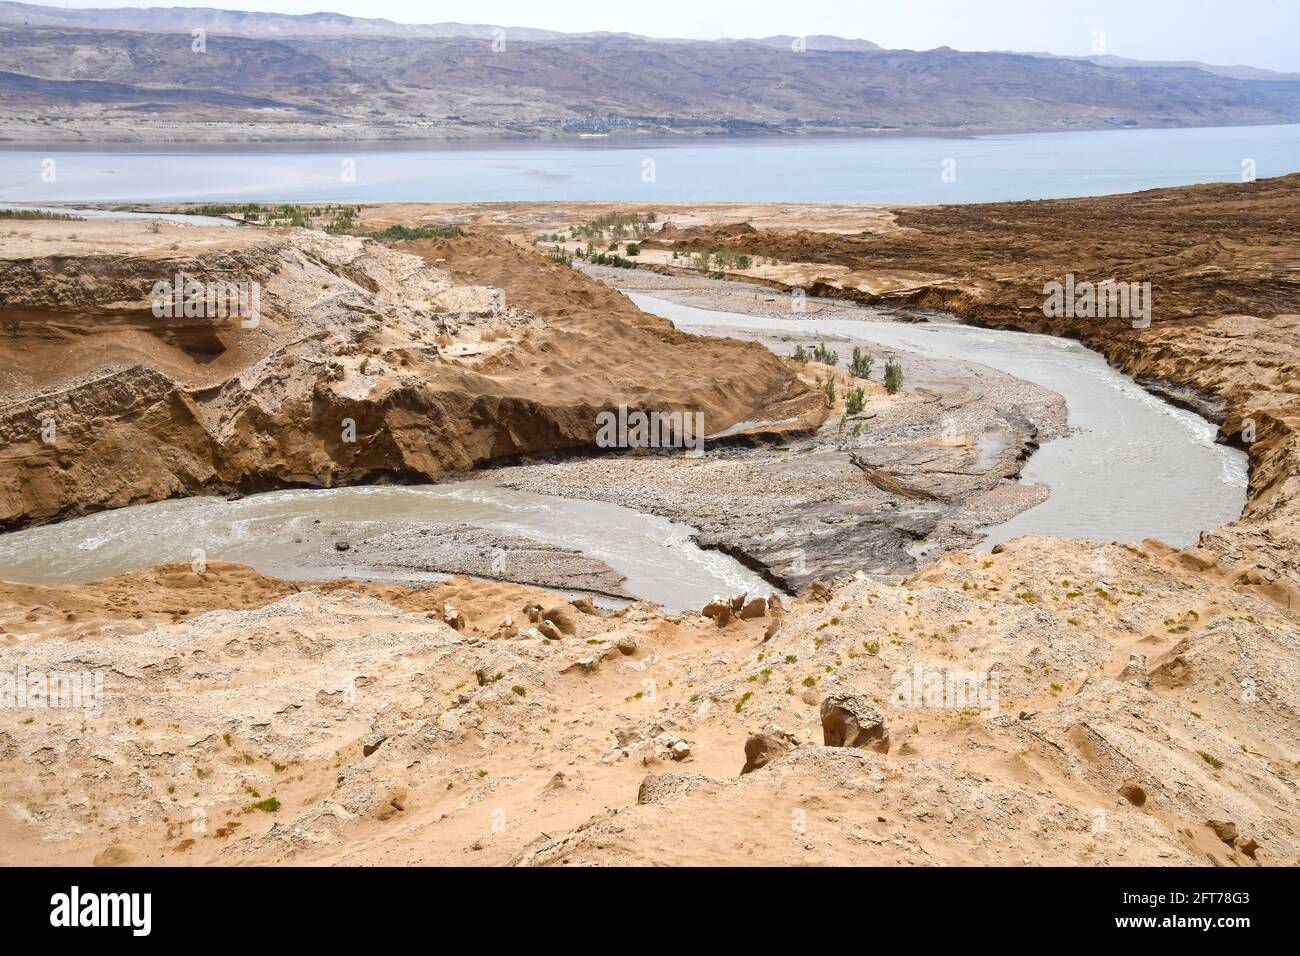 Jordan river delta, Dead sea, Israel Stock Photo - Alamy